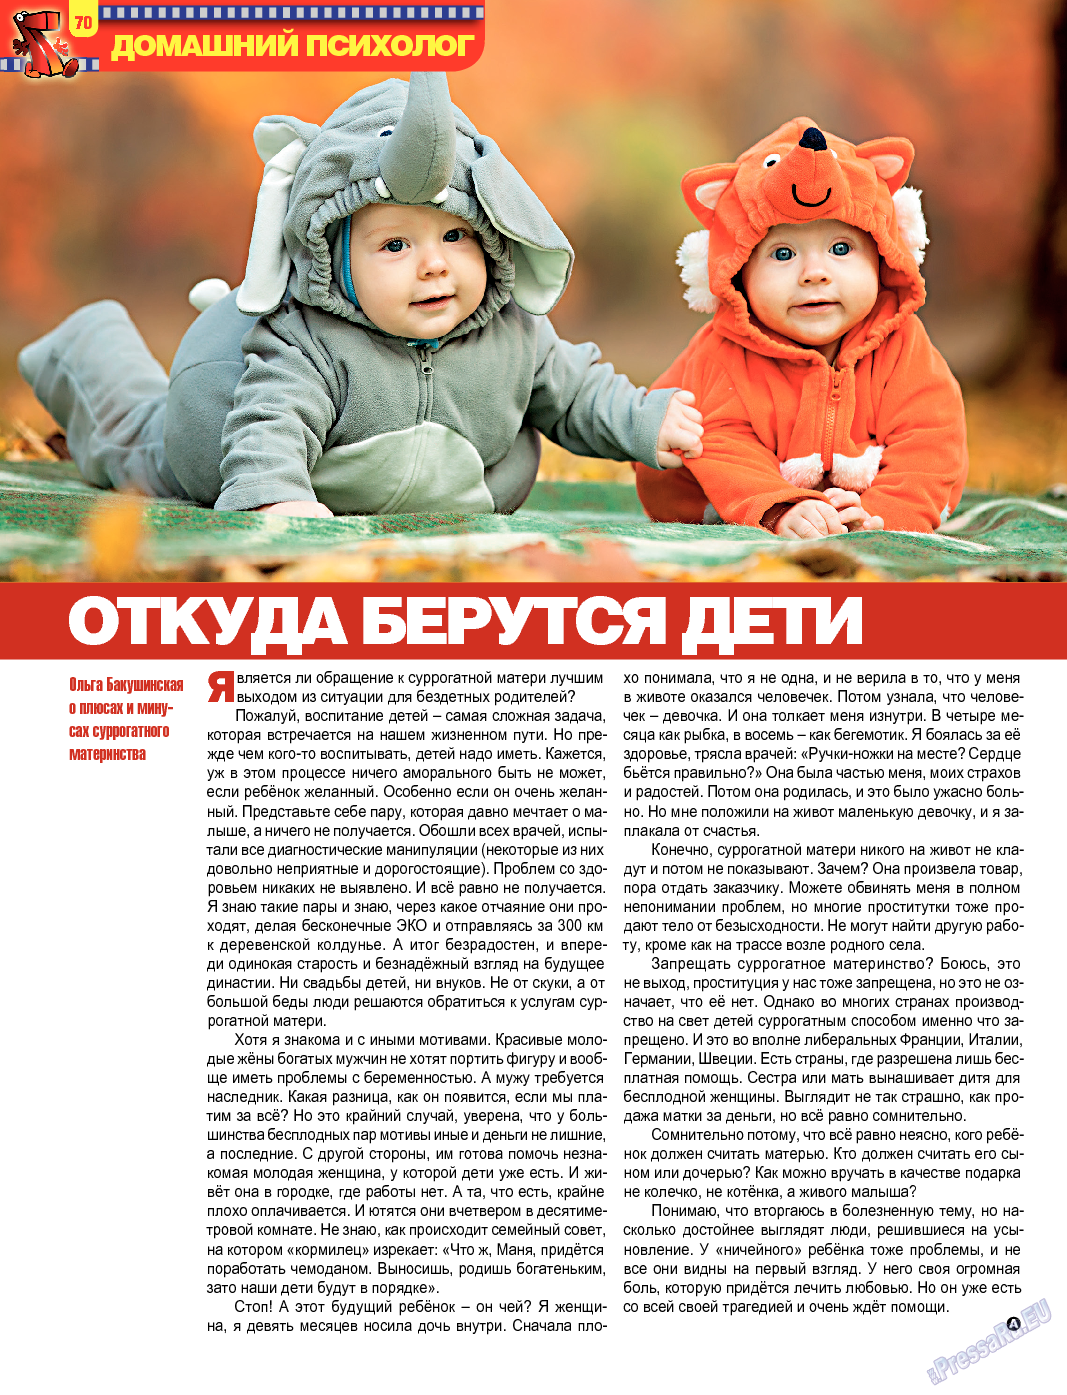 7плюс7я (журнал). 2014 год, номер 3, стр. 70